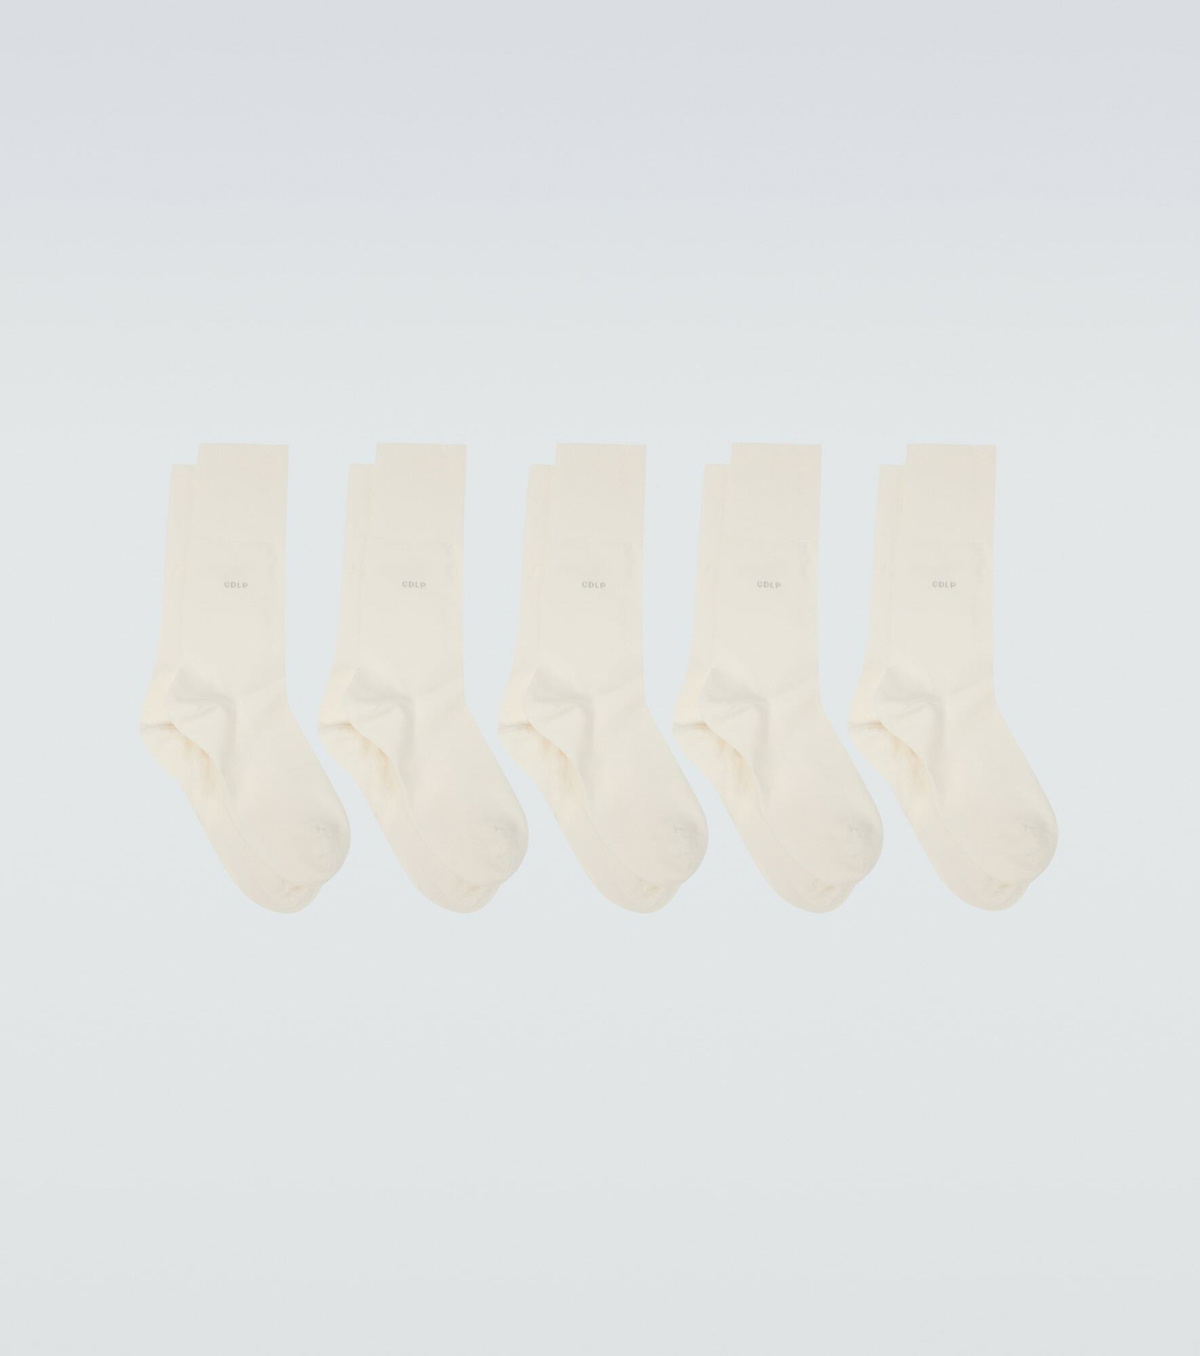 CDLP - Set of 5 pairs of socks